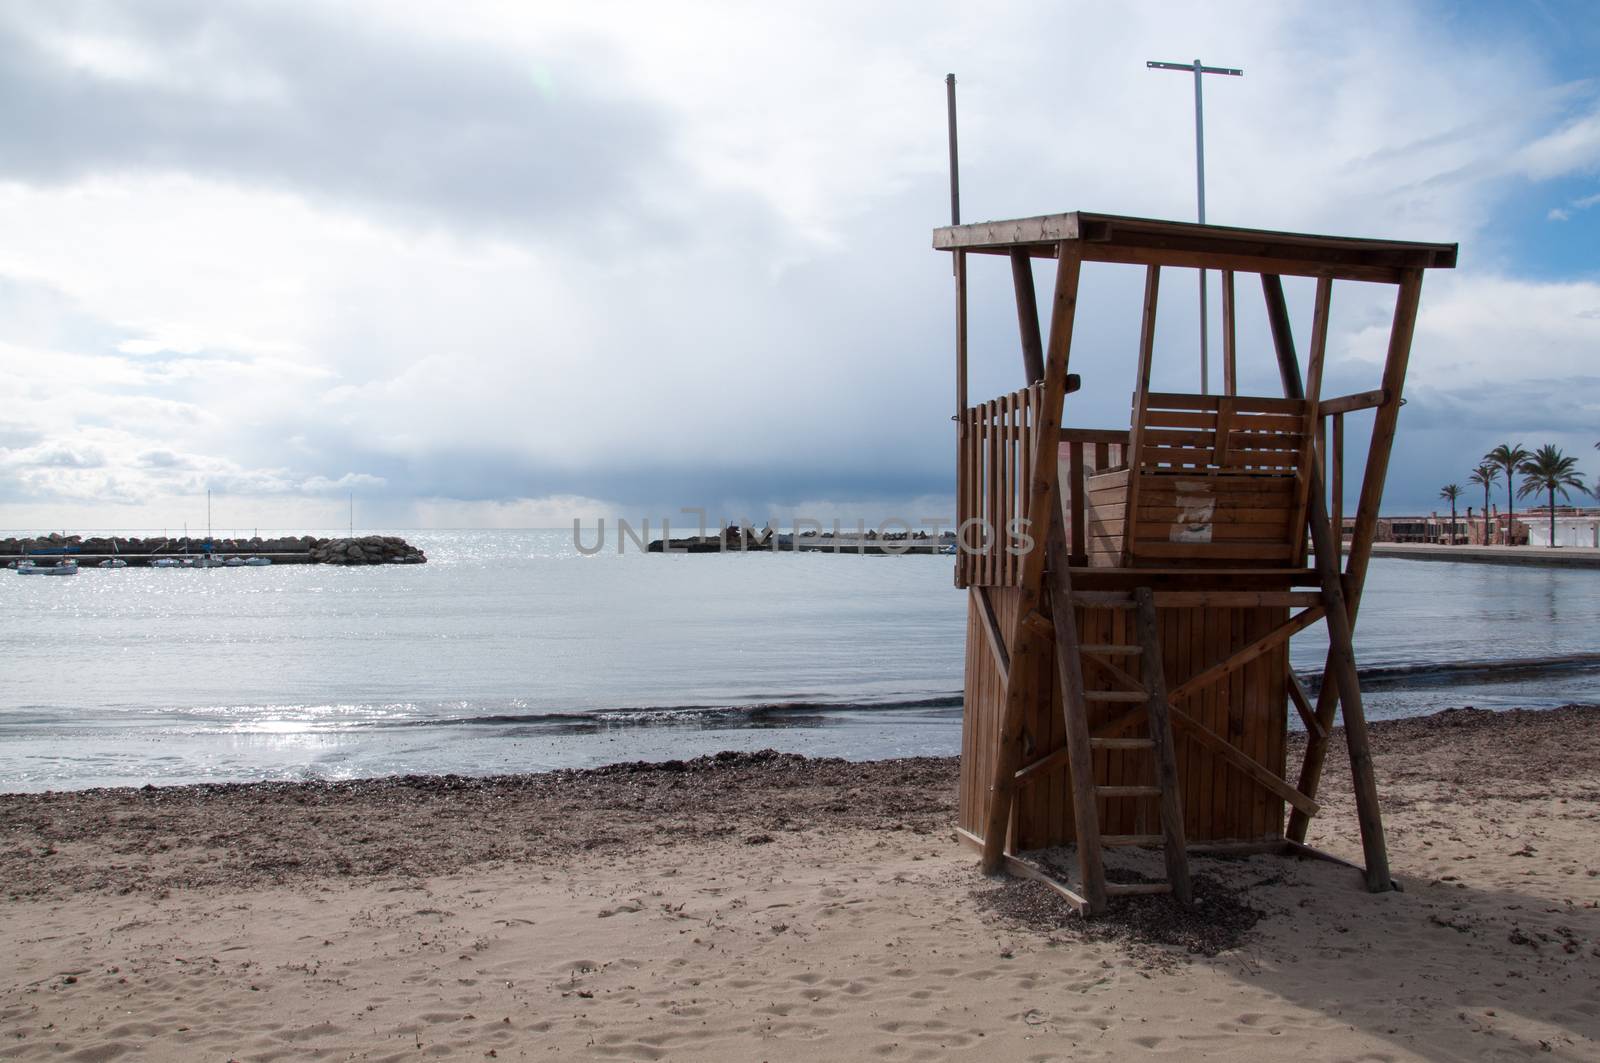 Life guard tower on empty beach in winter, Can Pastilla, Majorca.